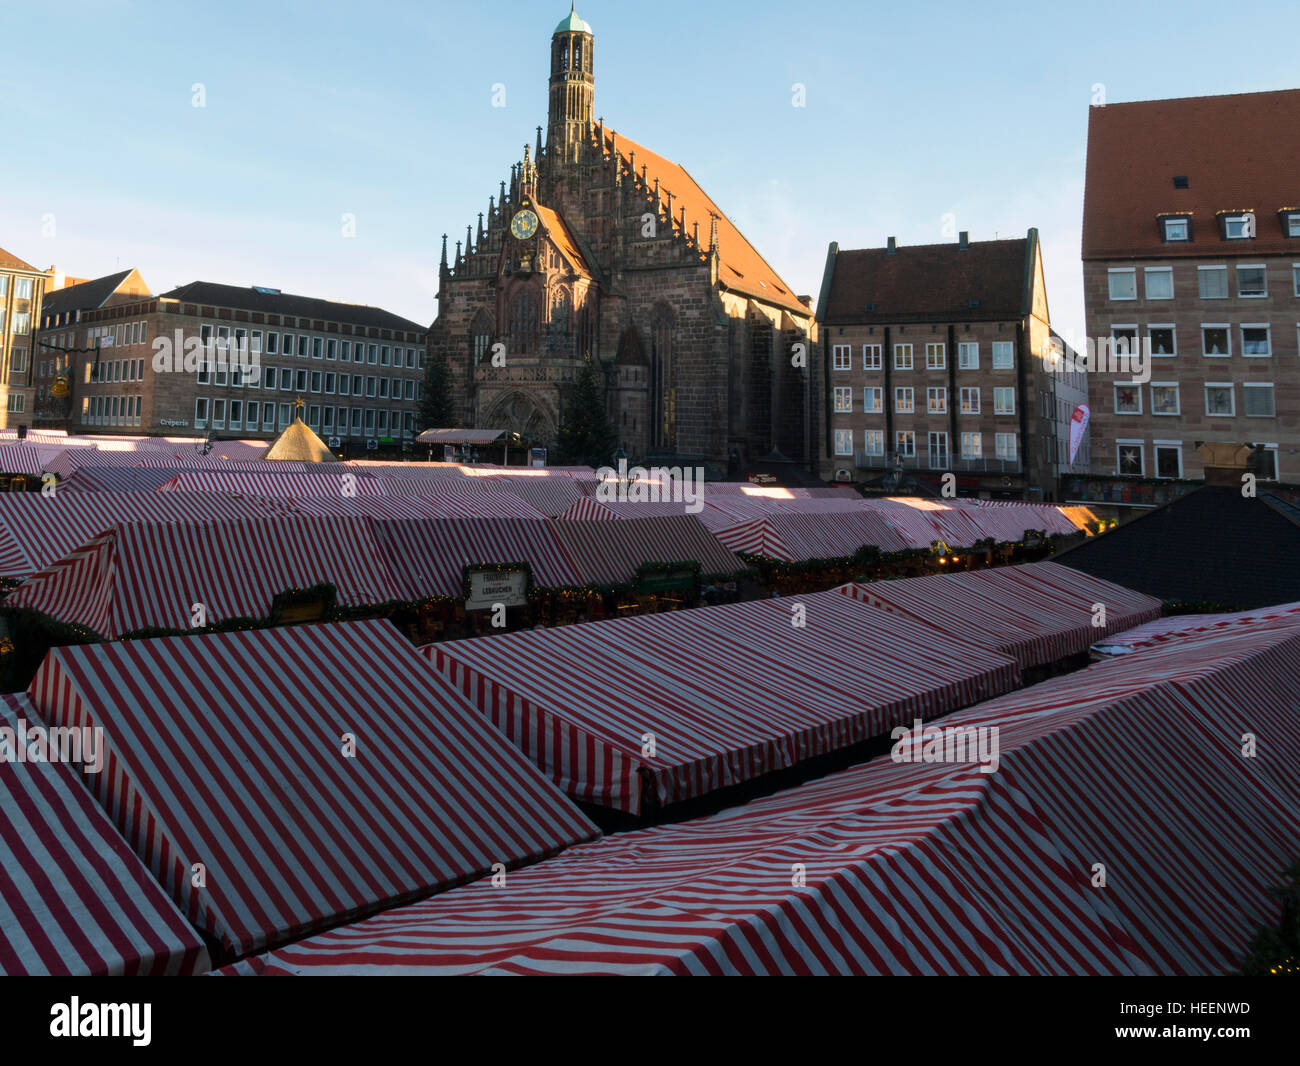 View across Christmas Market stalls Hauptmarkt to Church of Our Lady Nuremberg Bavaria Germany EU popular tourist destination Stock Photo